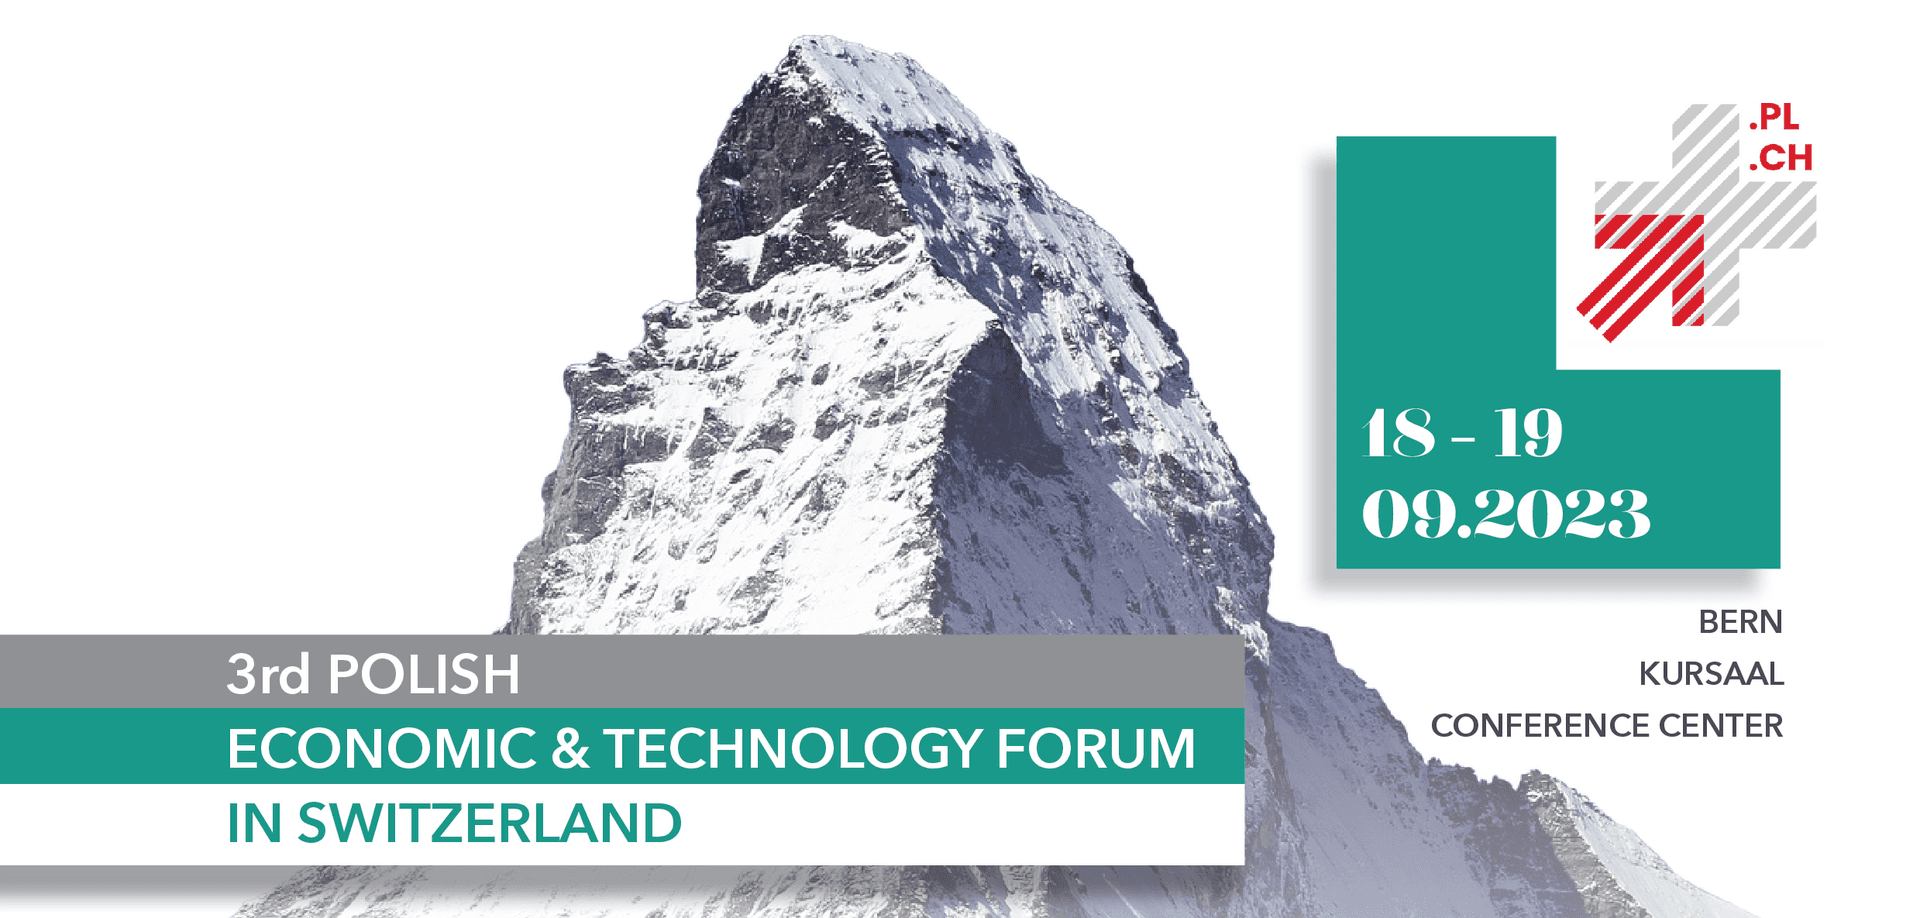 The 3rd Polish Economic & Technology Forum in Switzerland